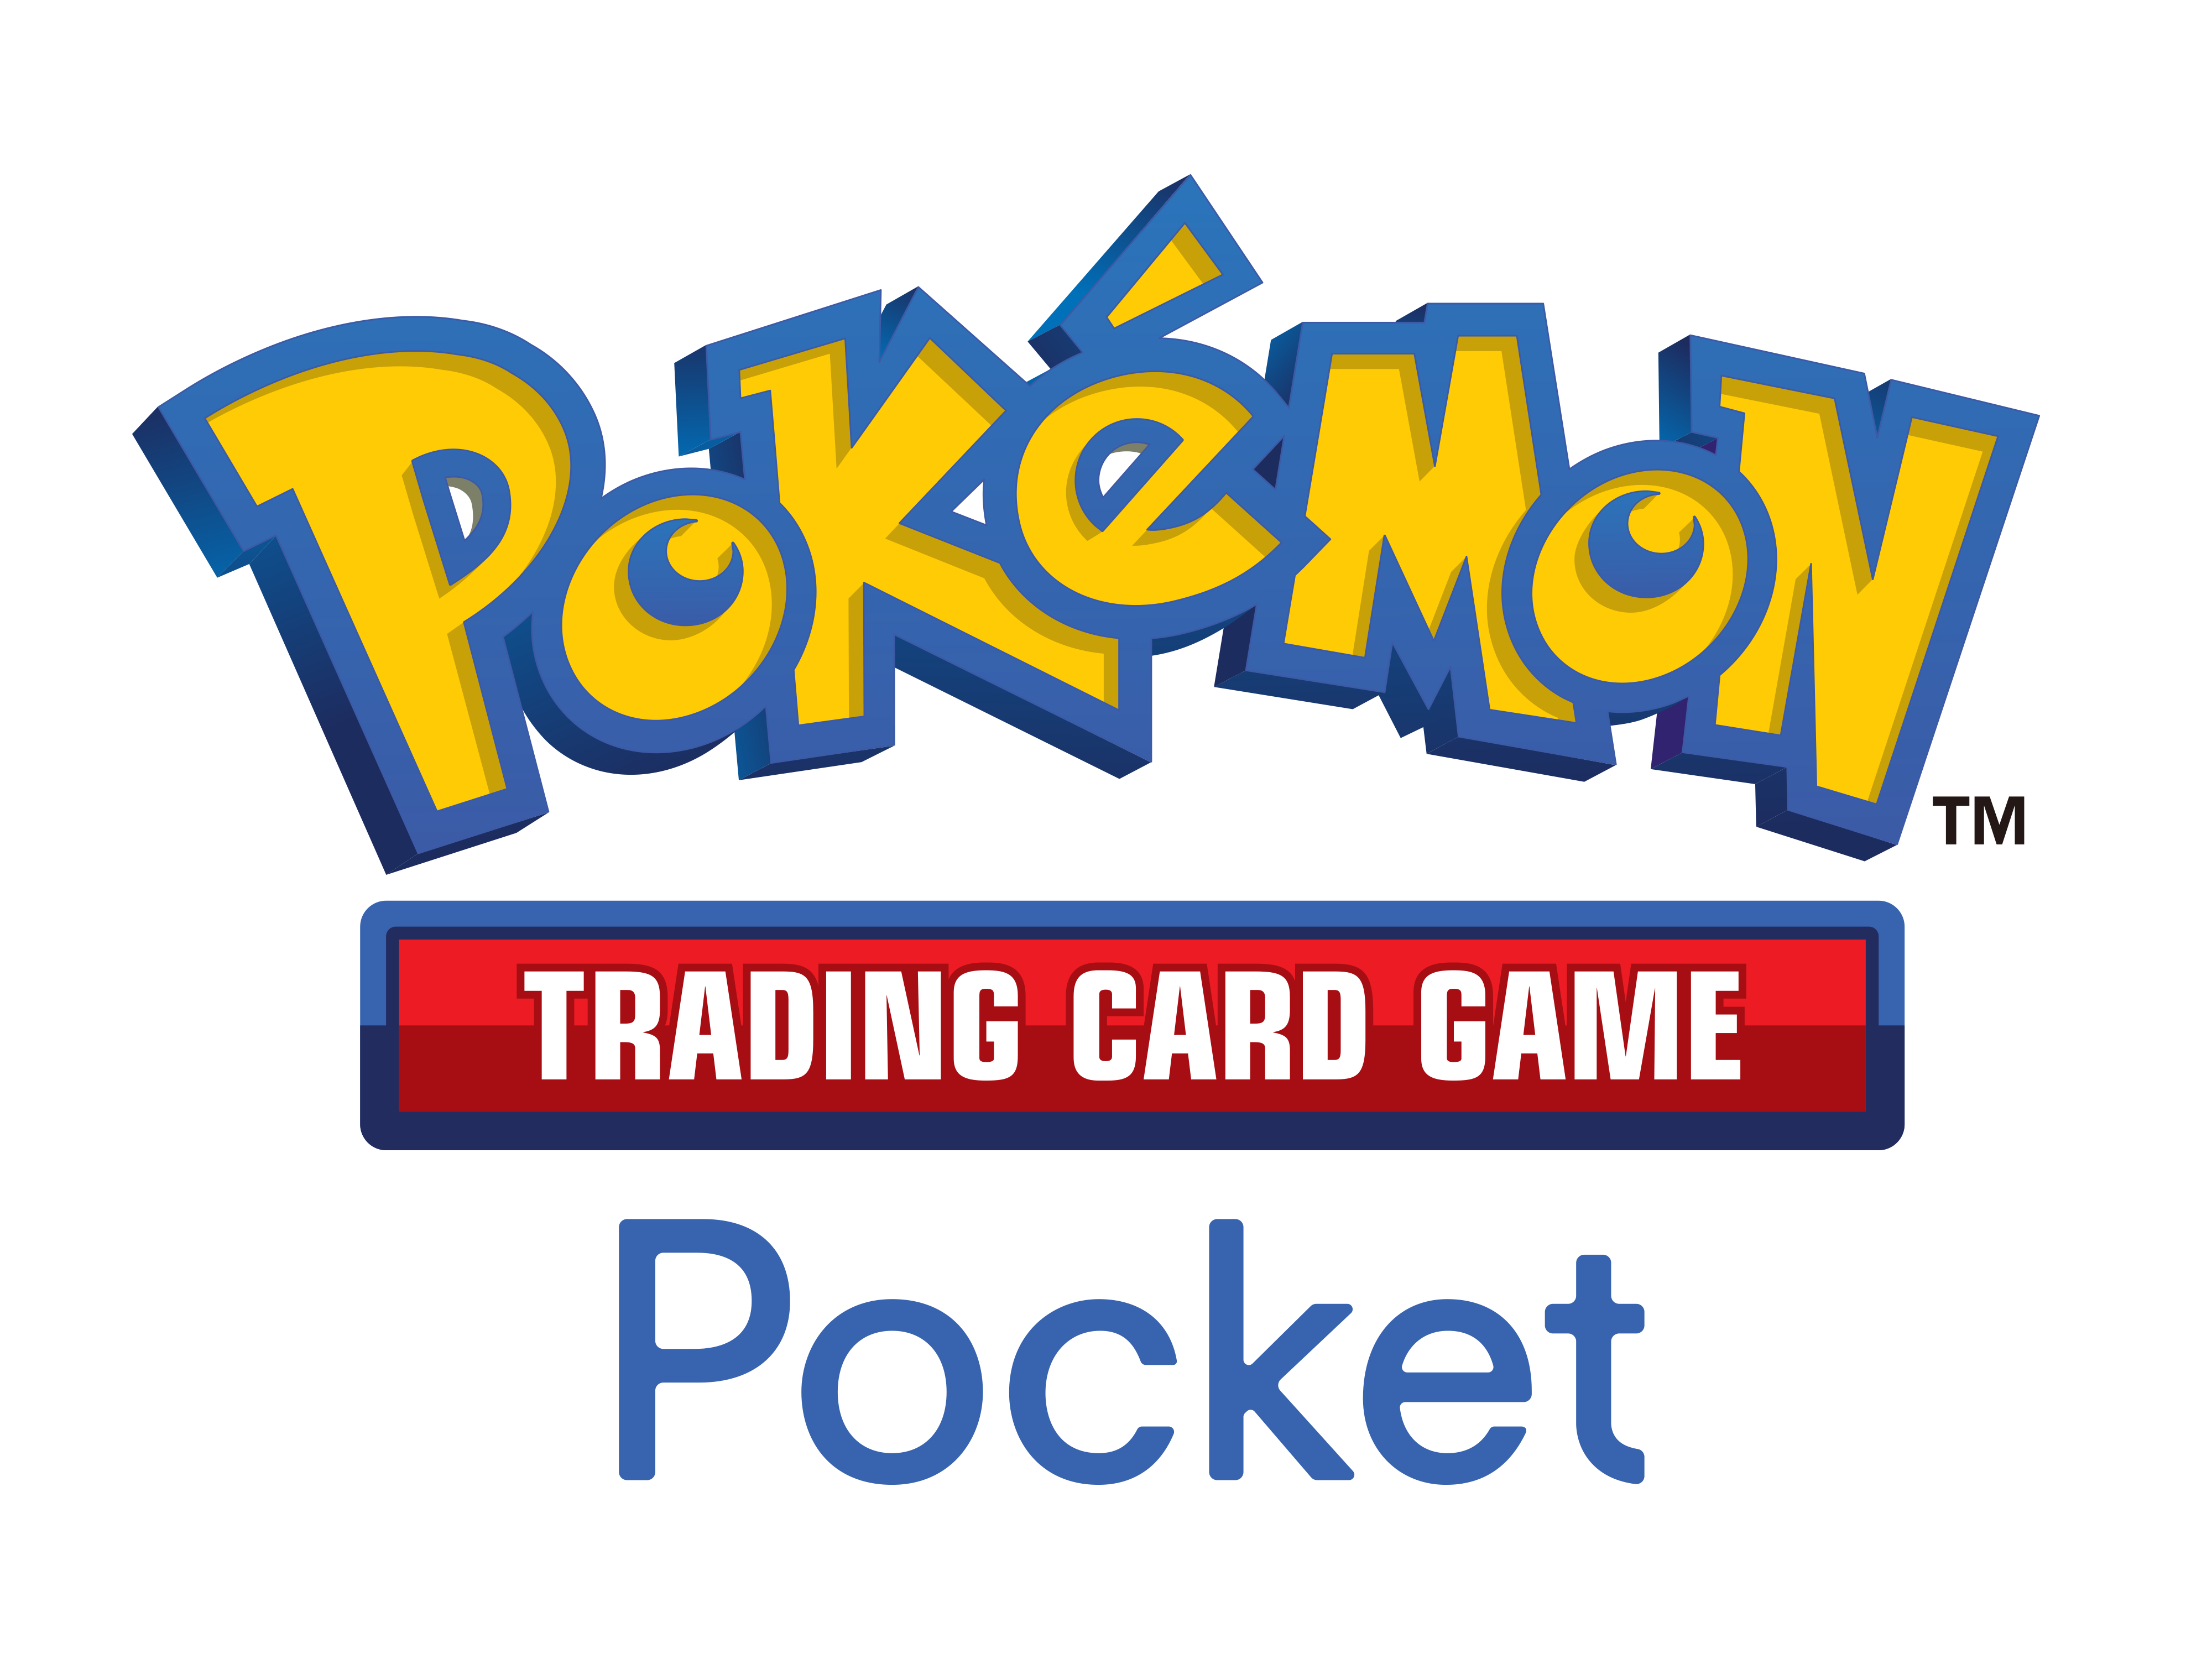 Pokémon Trading Card Game Pocket Logo